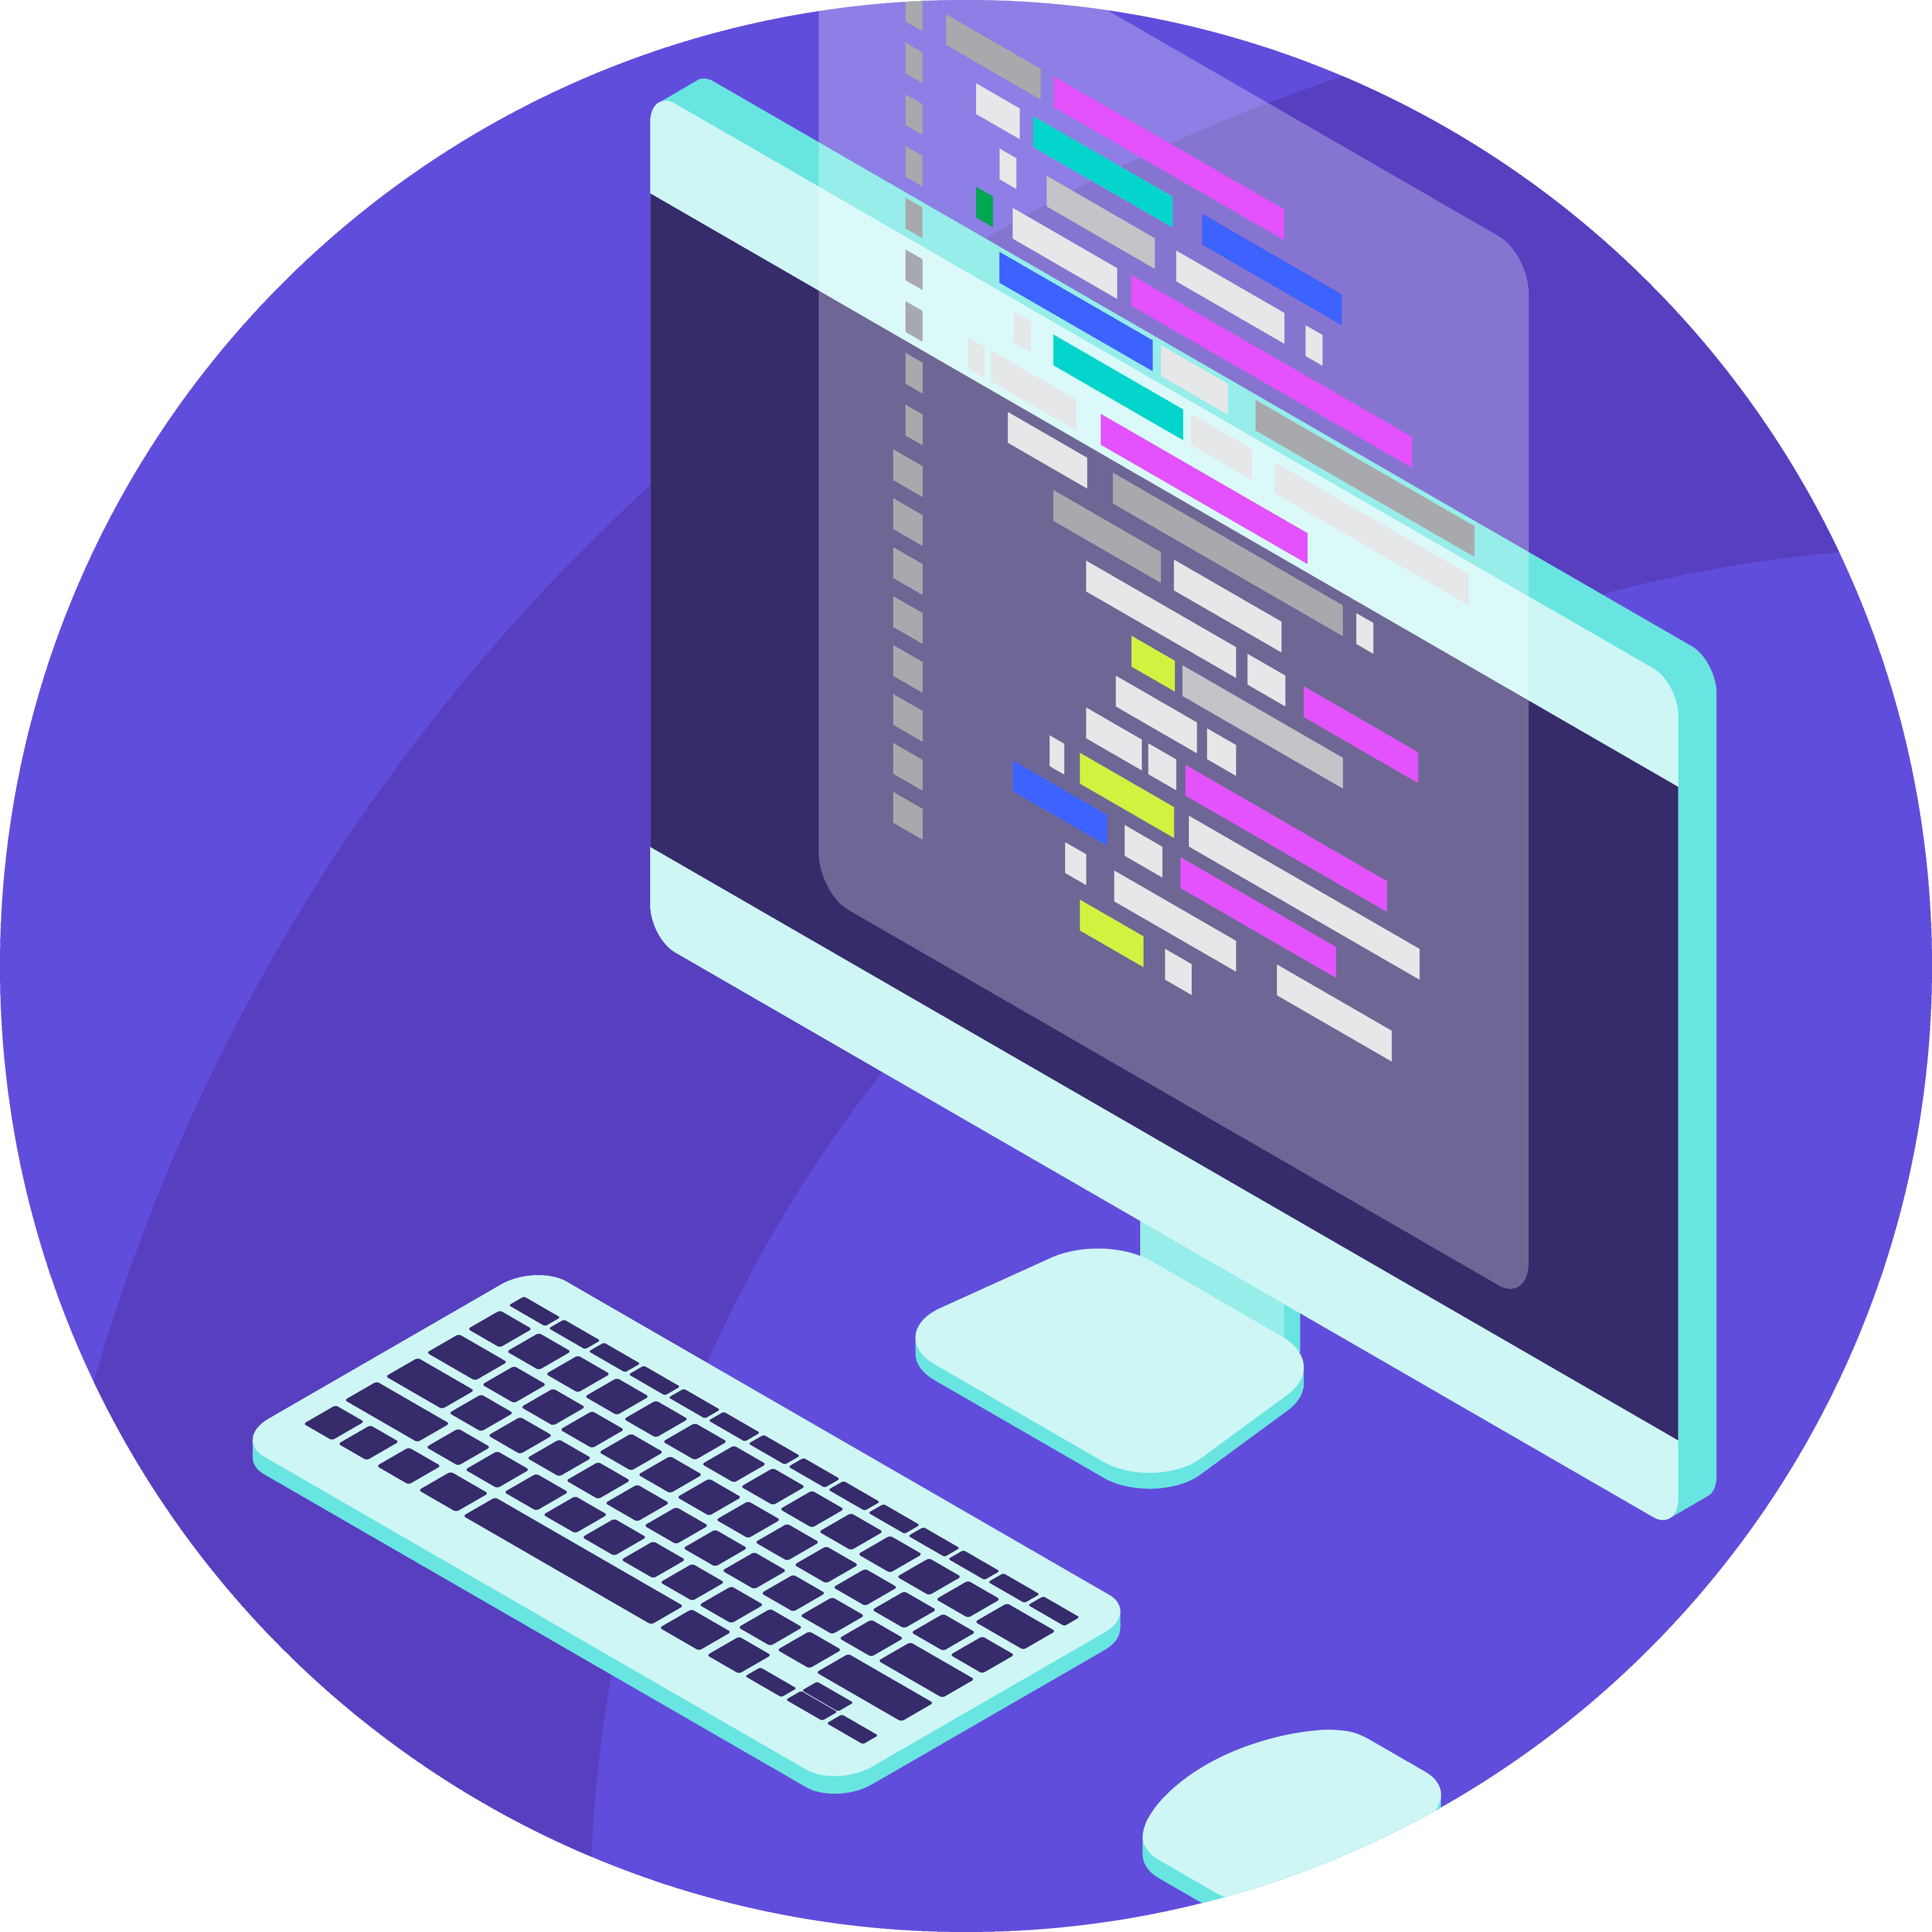 A computer running code testing and debugging